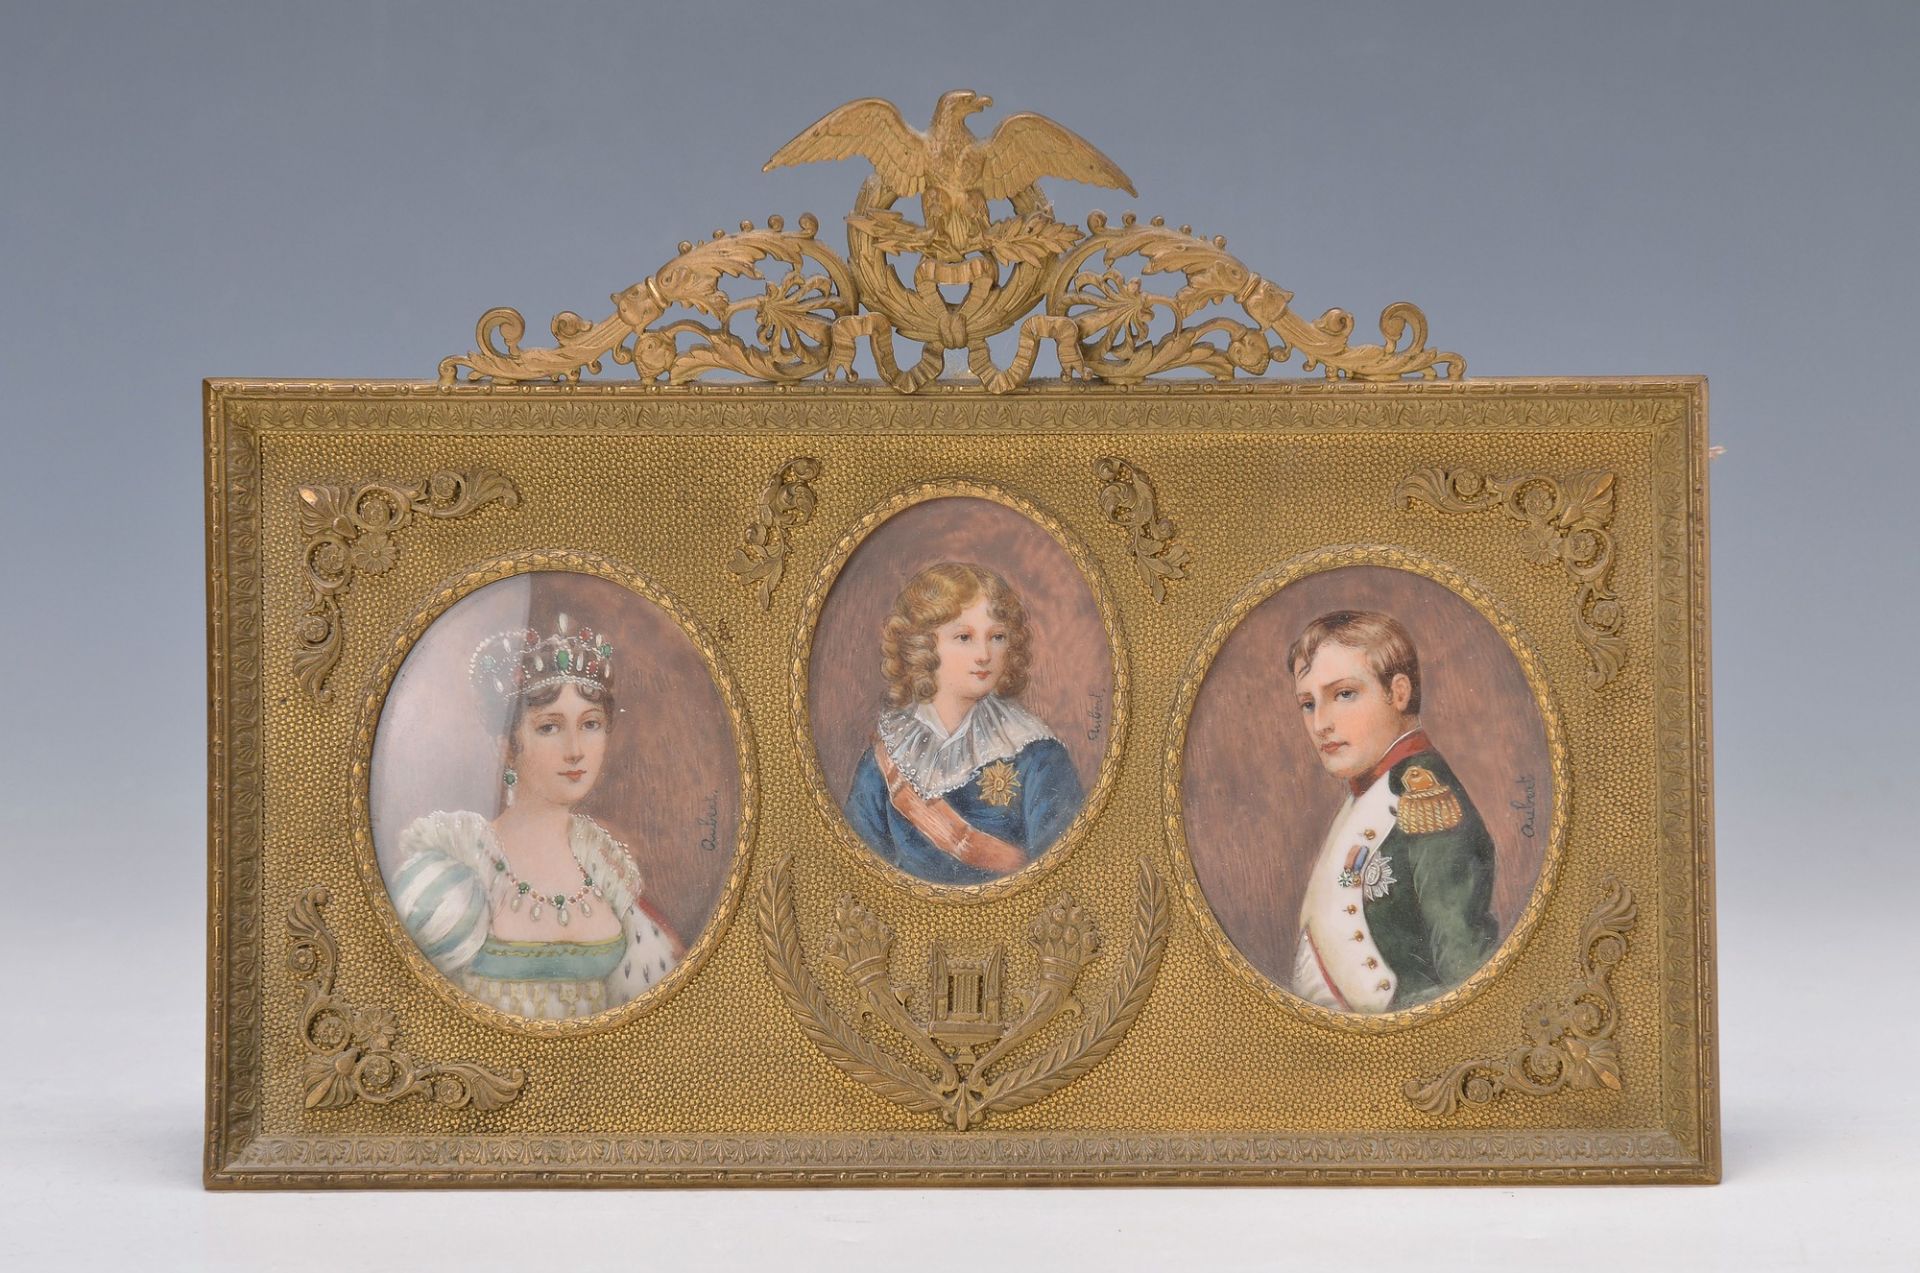 3 miniature paintings, France, around 1900, Portraits of Napoleon Bonaparte, his wife Josephine